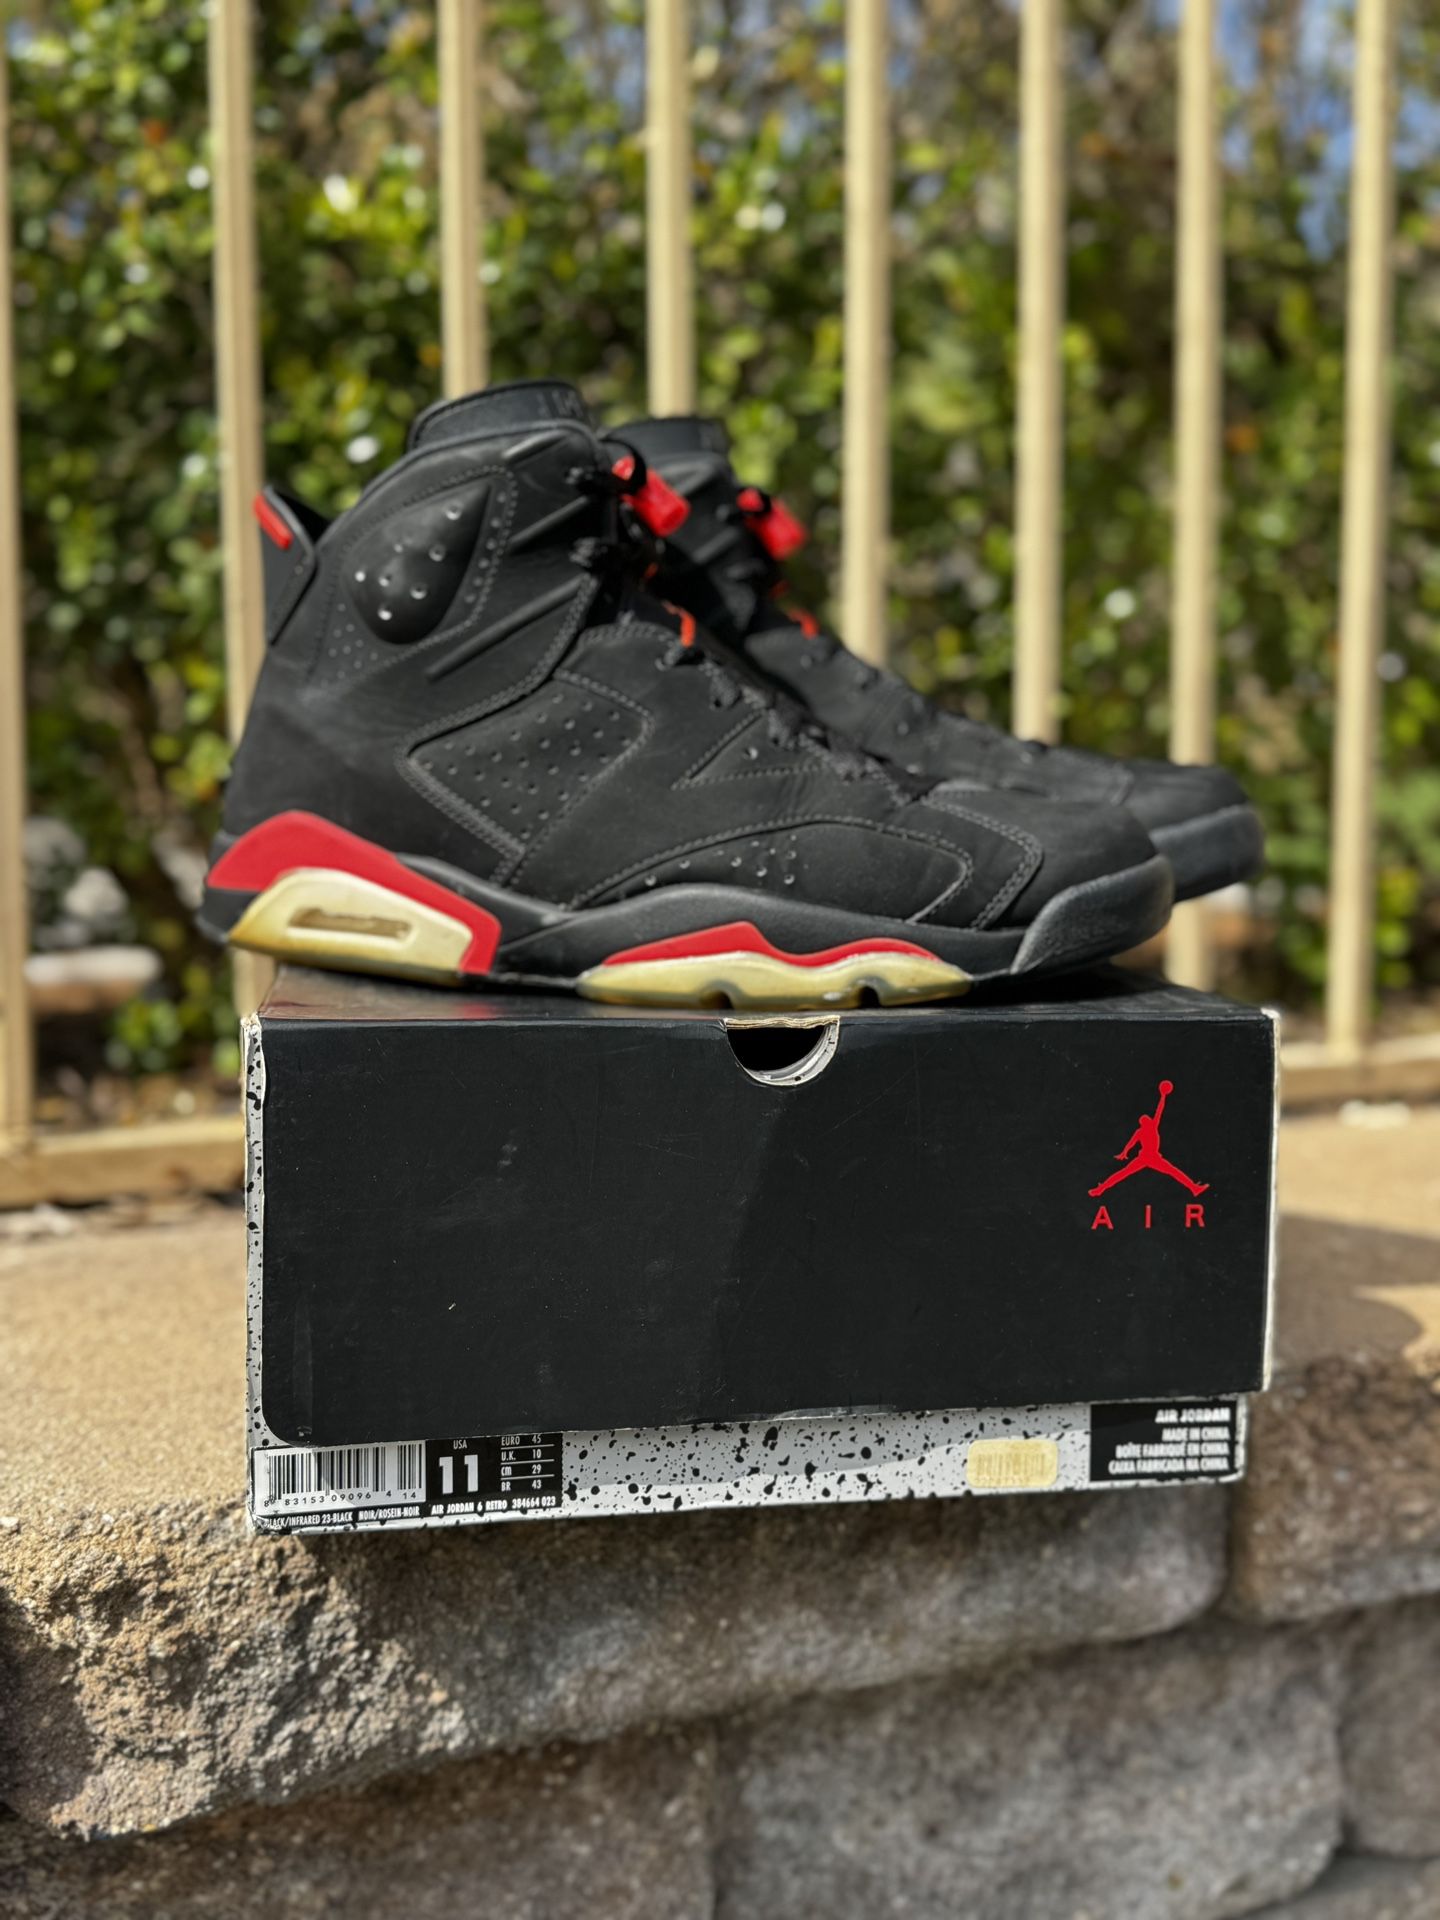 Jordan 6 Infrared Black 2014 Size 11